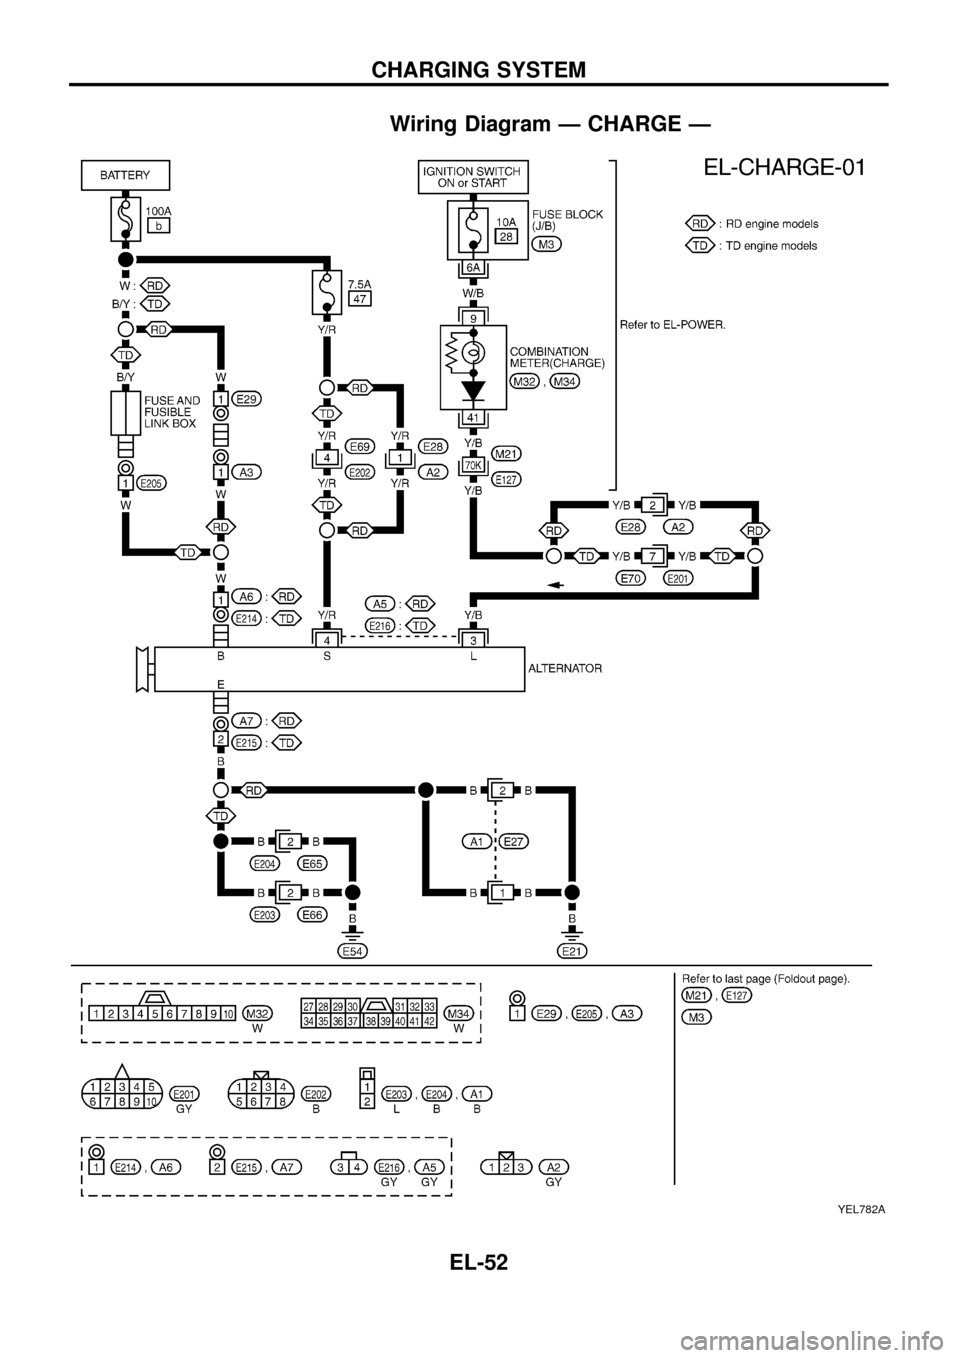 NISSAN PATROL 1998 Y61 / 5.G Electrical System Repair Manual Wiring Diagram Ð CHARGE Ð
YEL782A
CHARGING SYSTEM
EL-52 